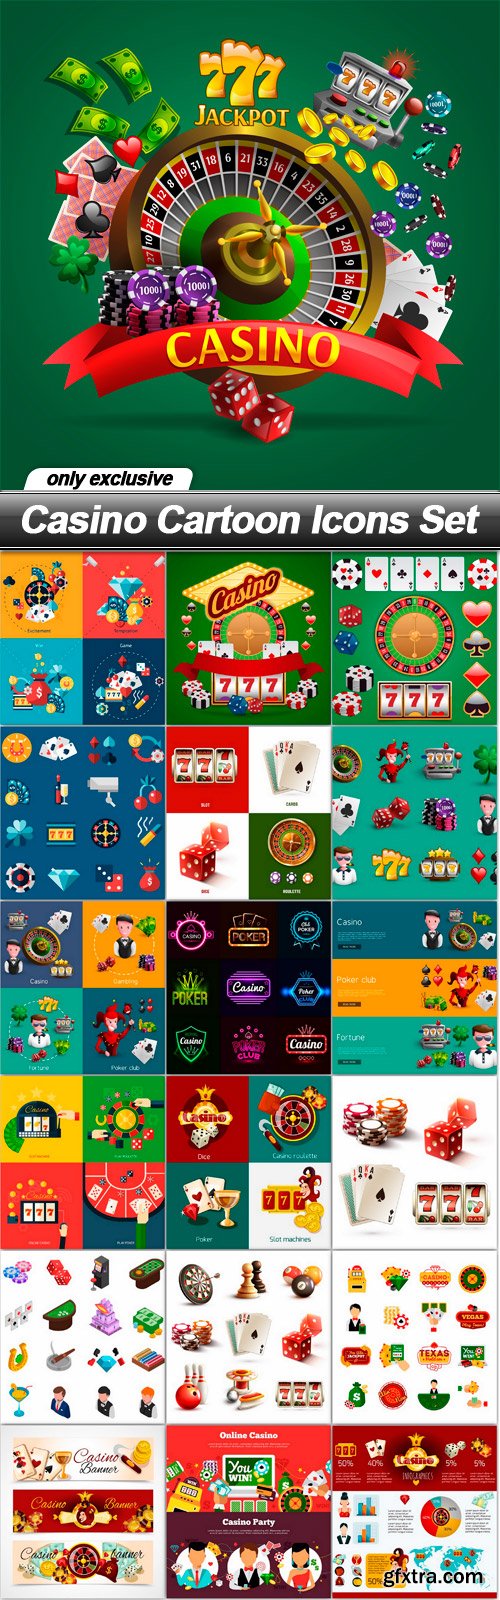 Casino Cartoon Icons Set - 19 EPS